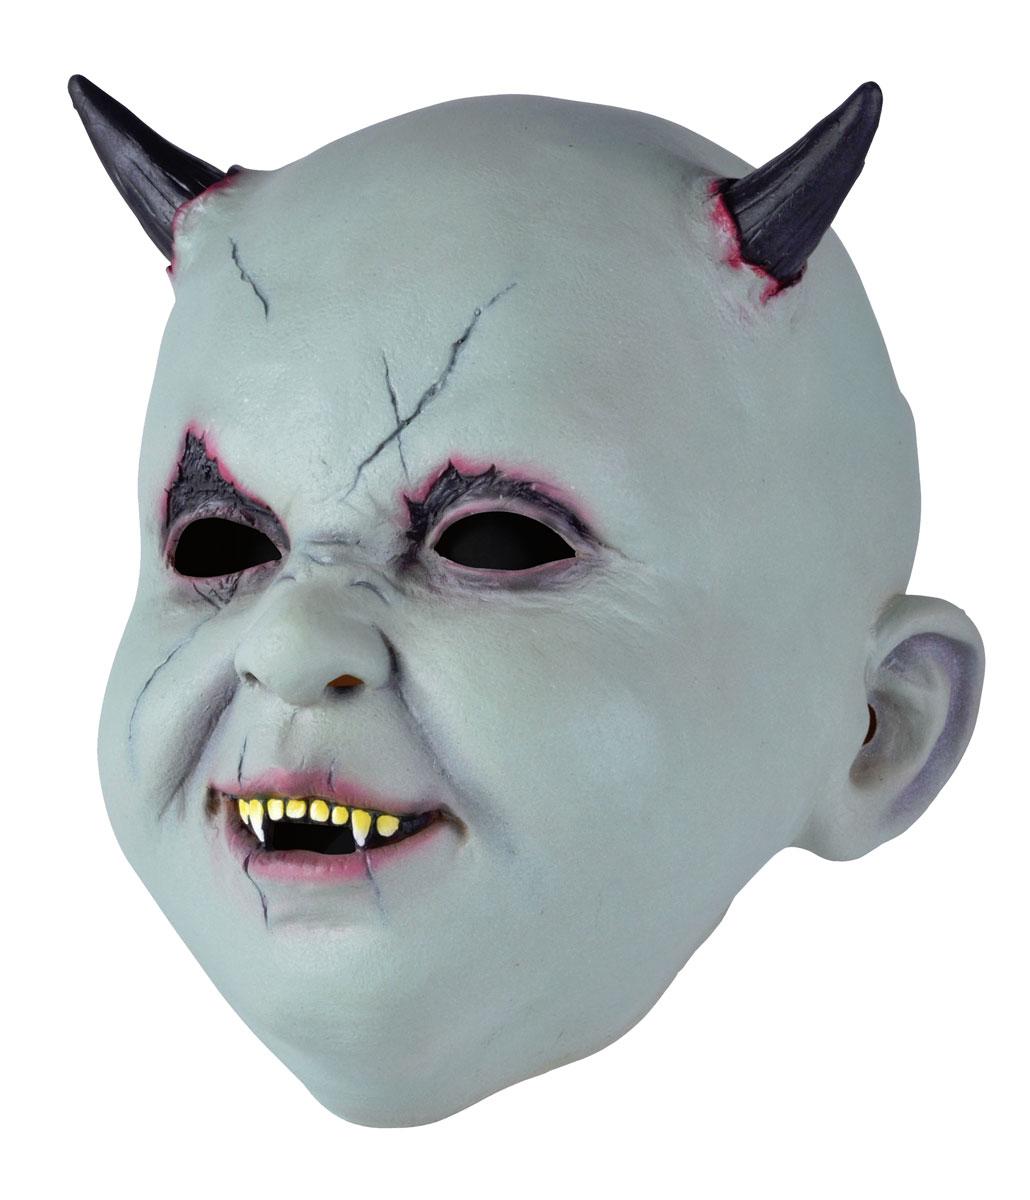 Adult Devil Baby Mask Halloween Costume Masks by Bristol Novelties BM516 available here at Karnival Costumes online party shop